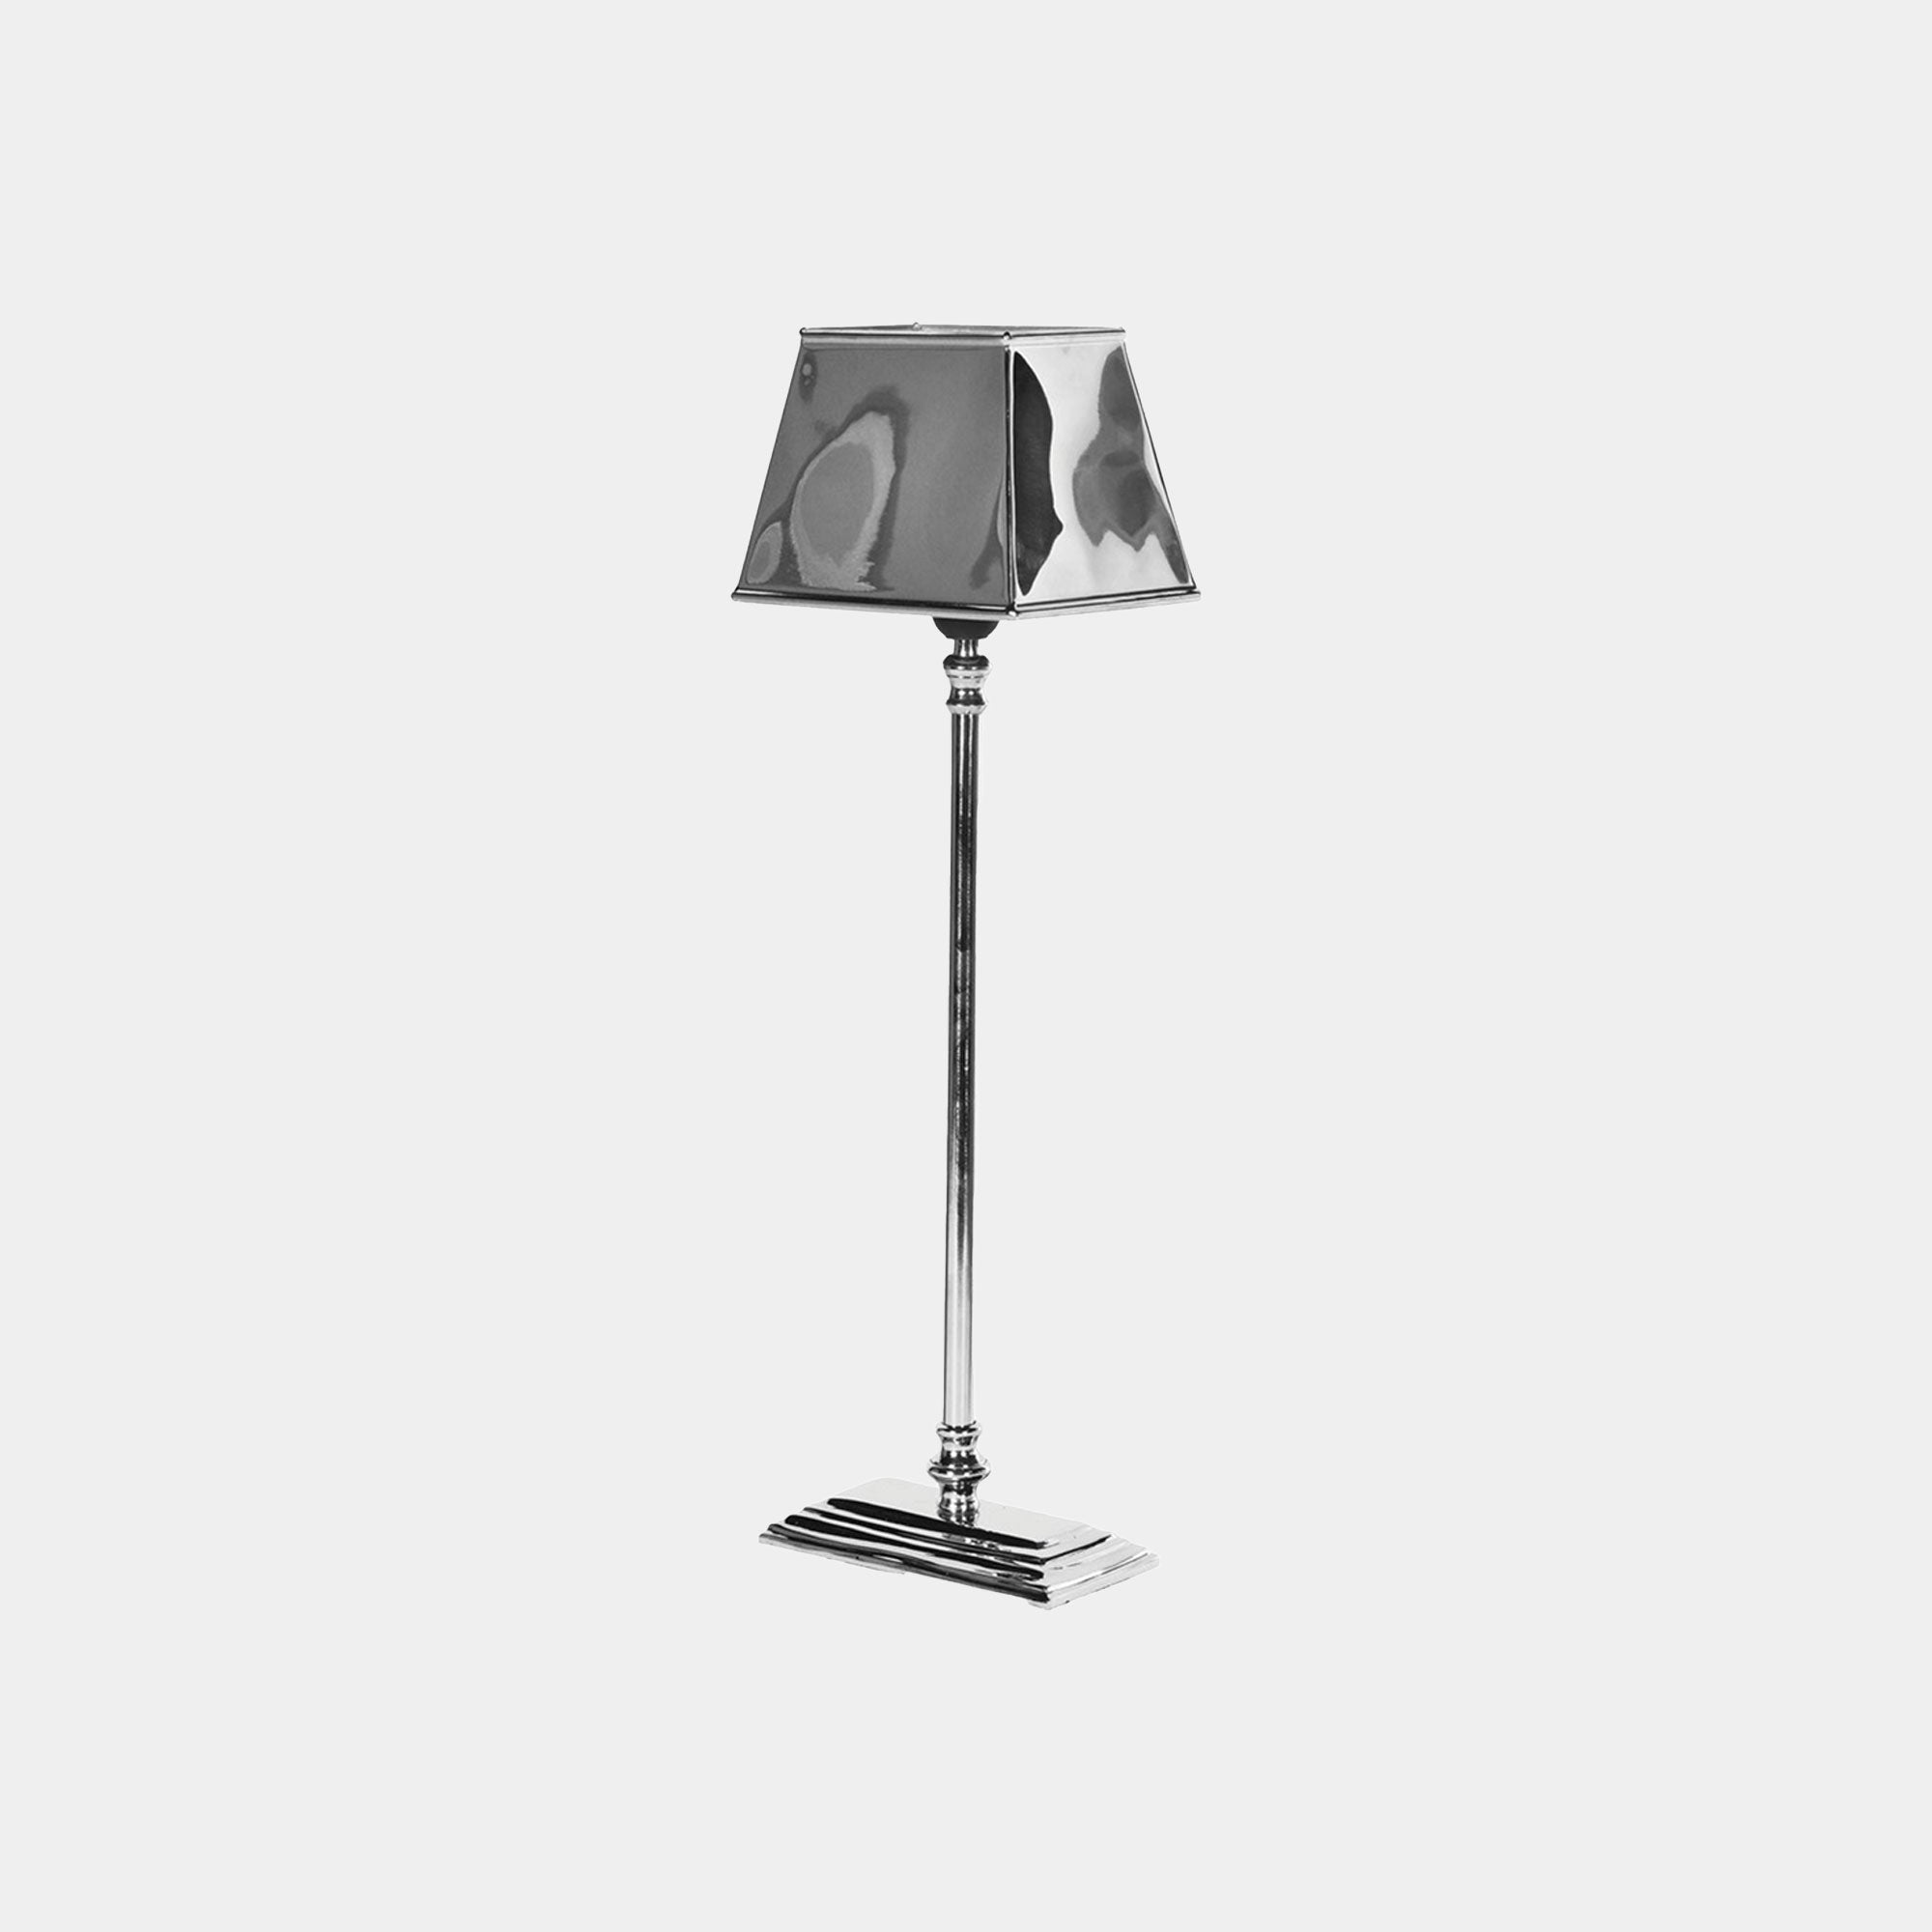 Peter Chrome Table Lamp